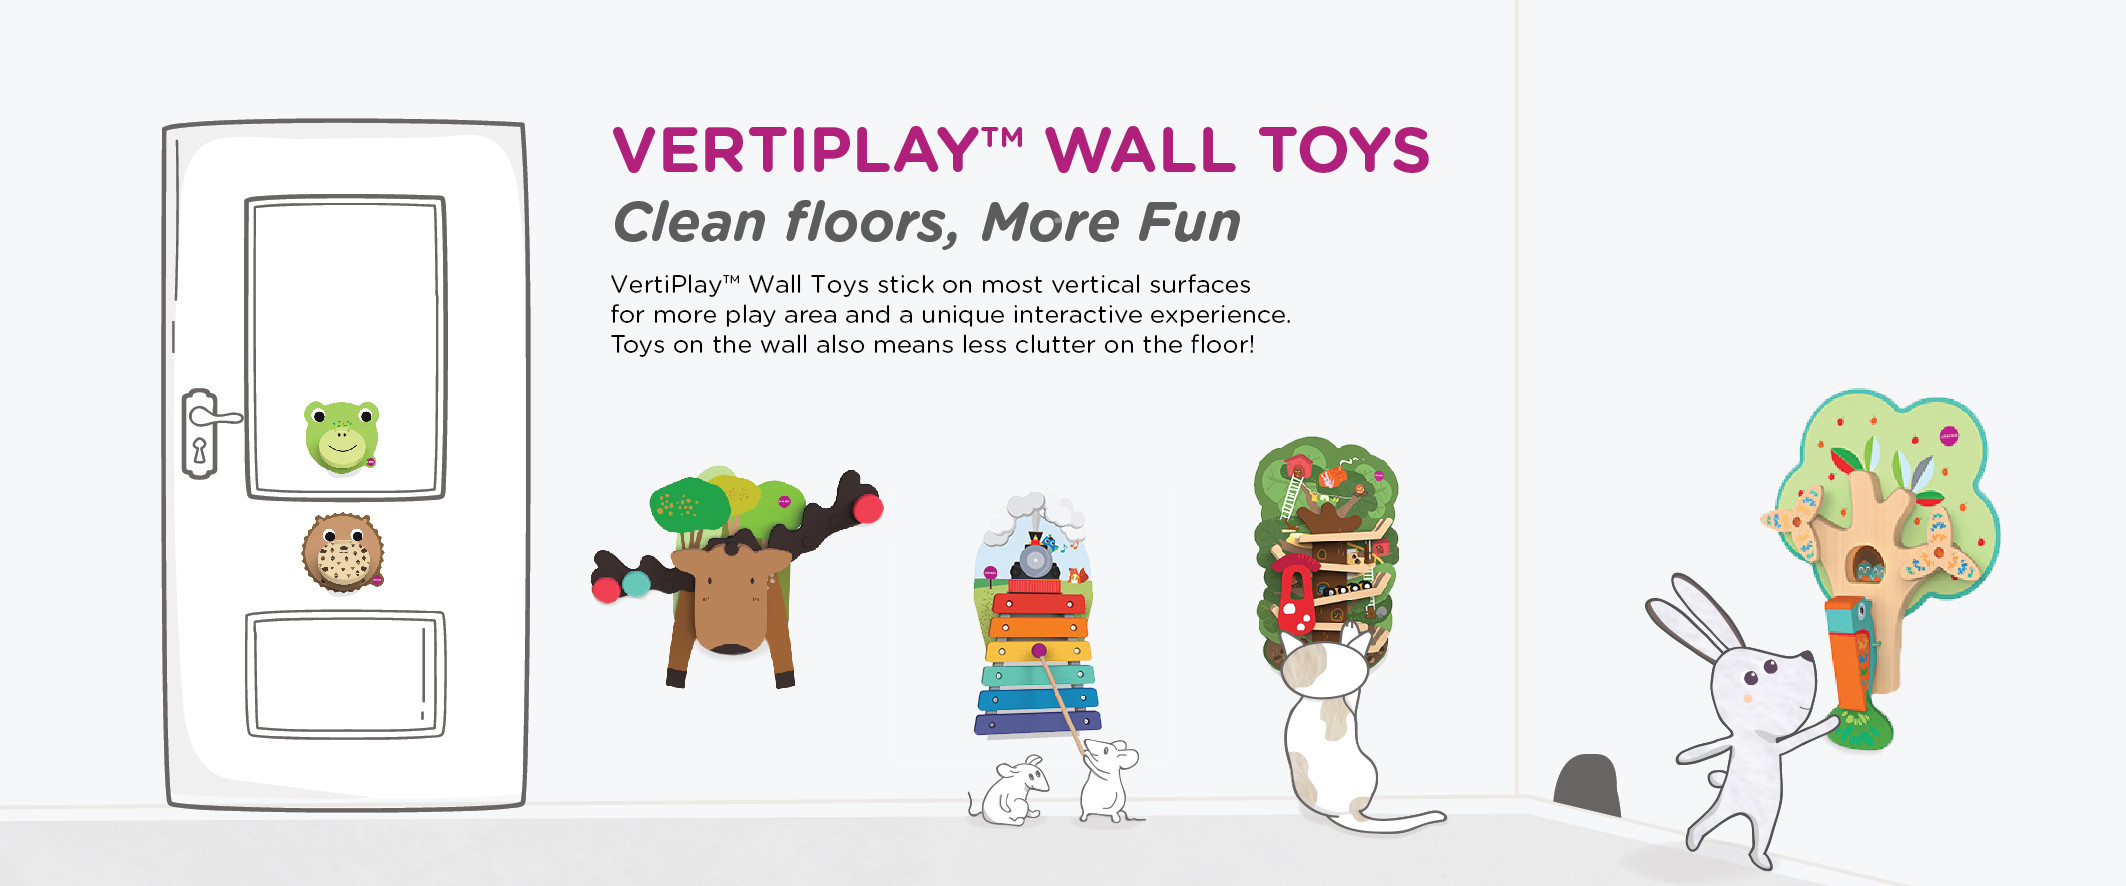 oribel vertiplay wall toys